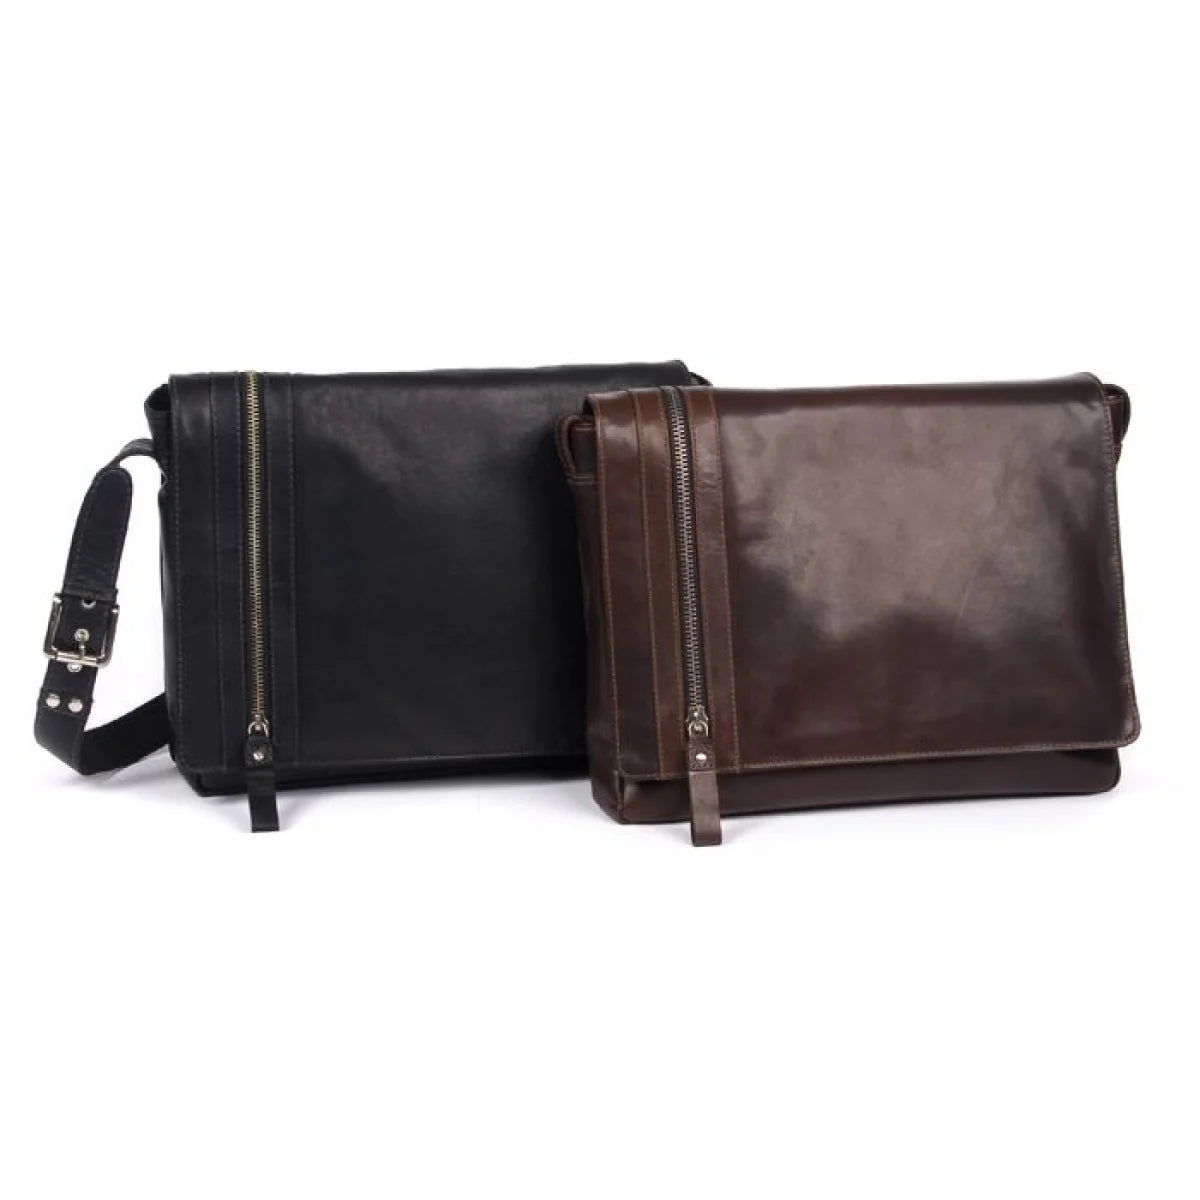 Oran - Phil Leather Messenger Bag Black - rainbowbags